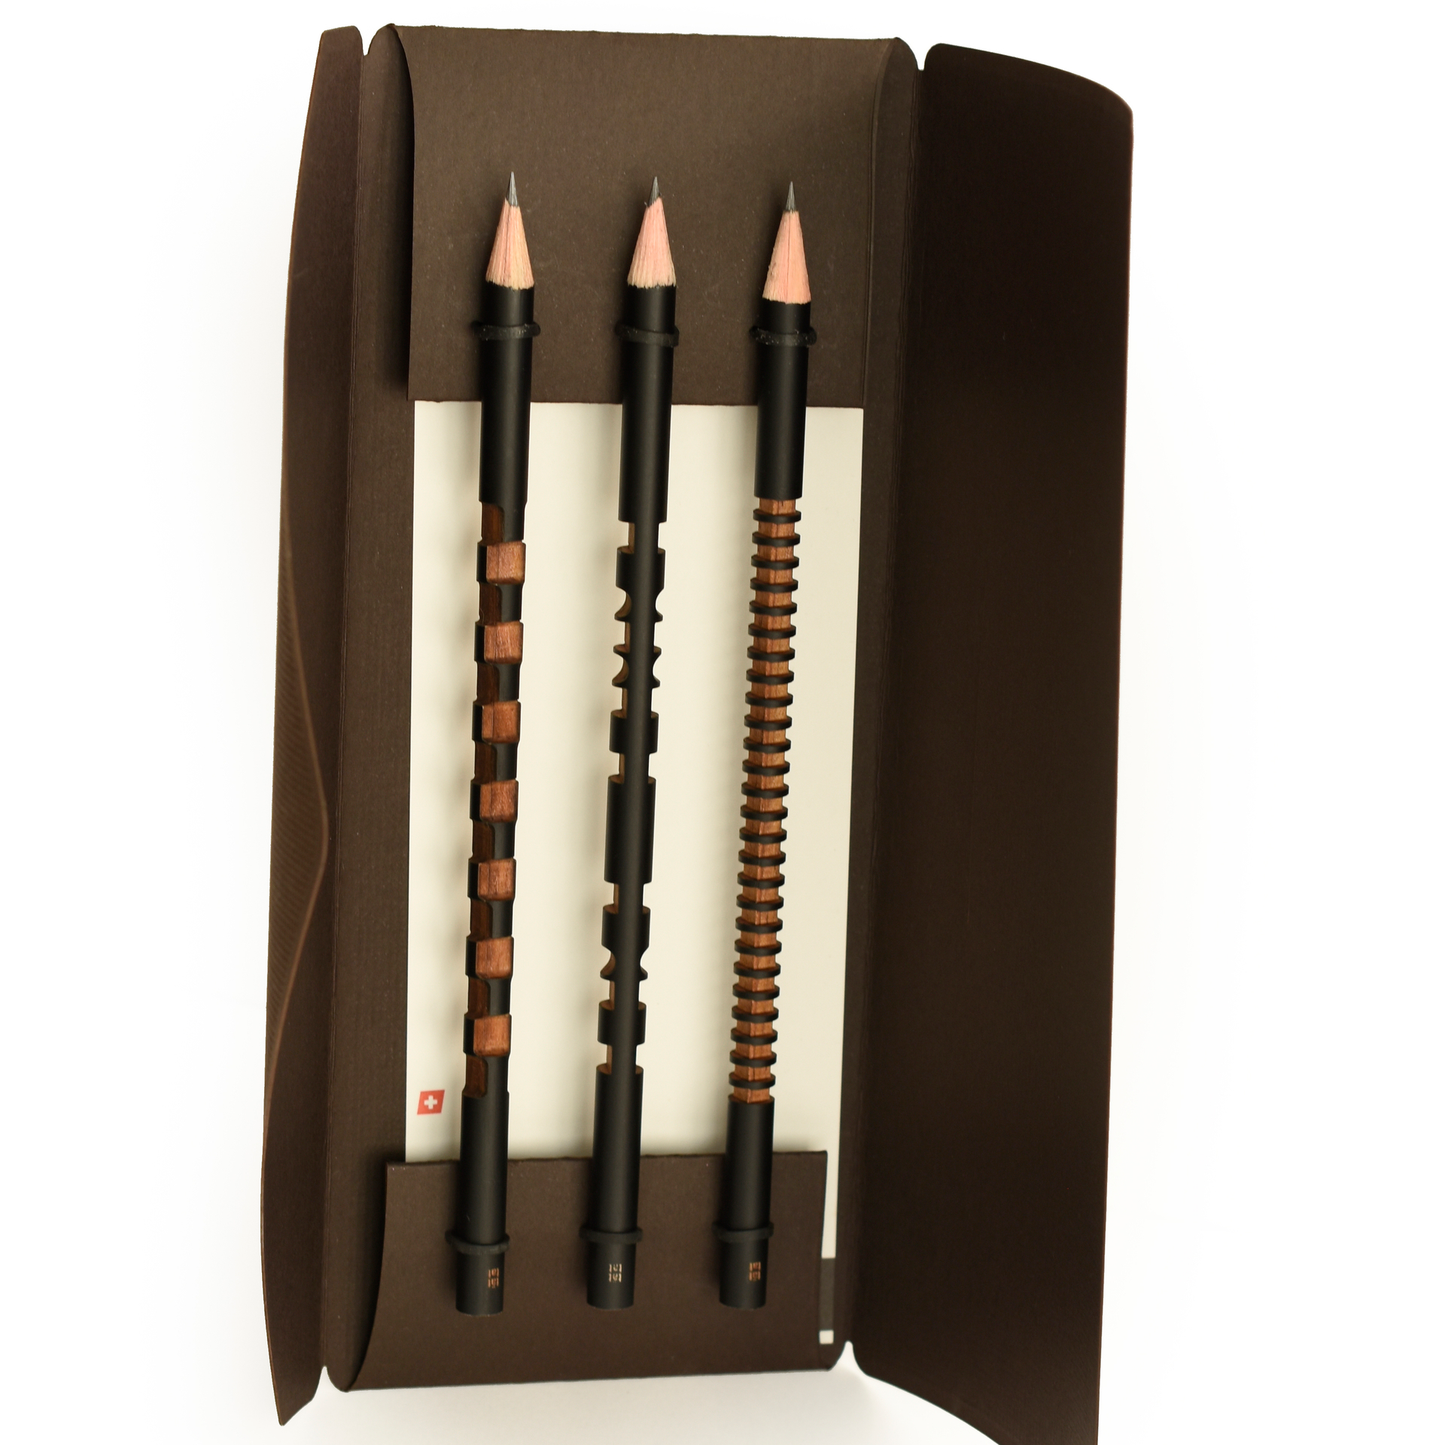 tät-tat - Bleistifte / Pencils - Gift set with 3 pencils